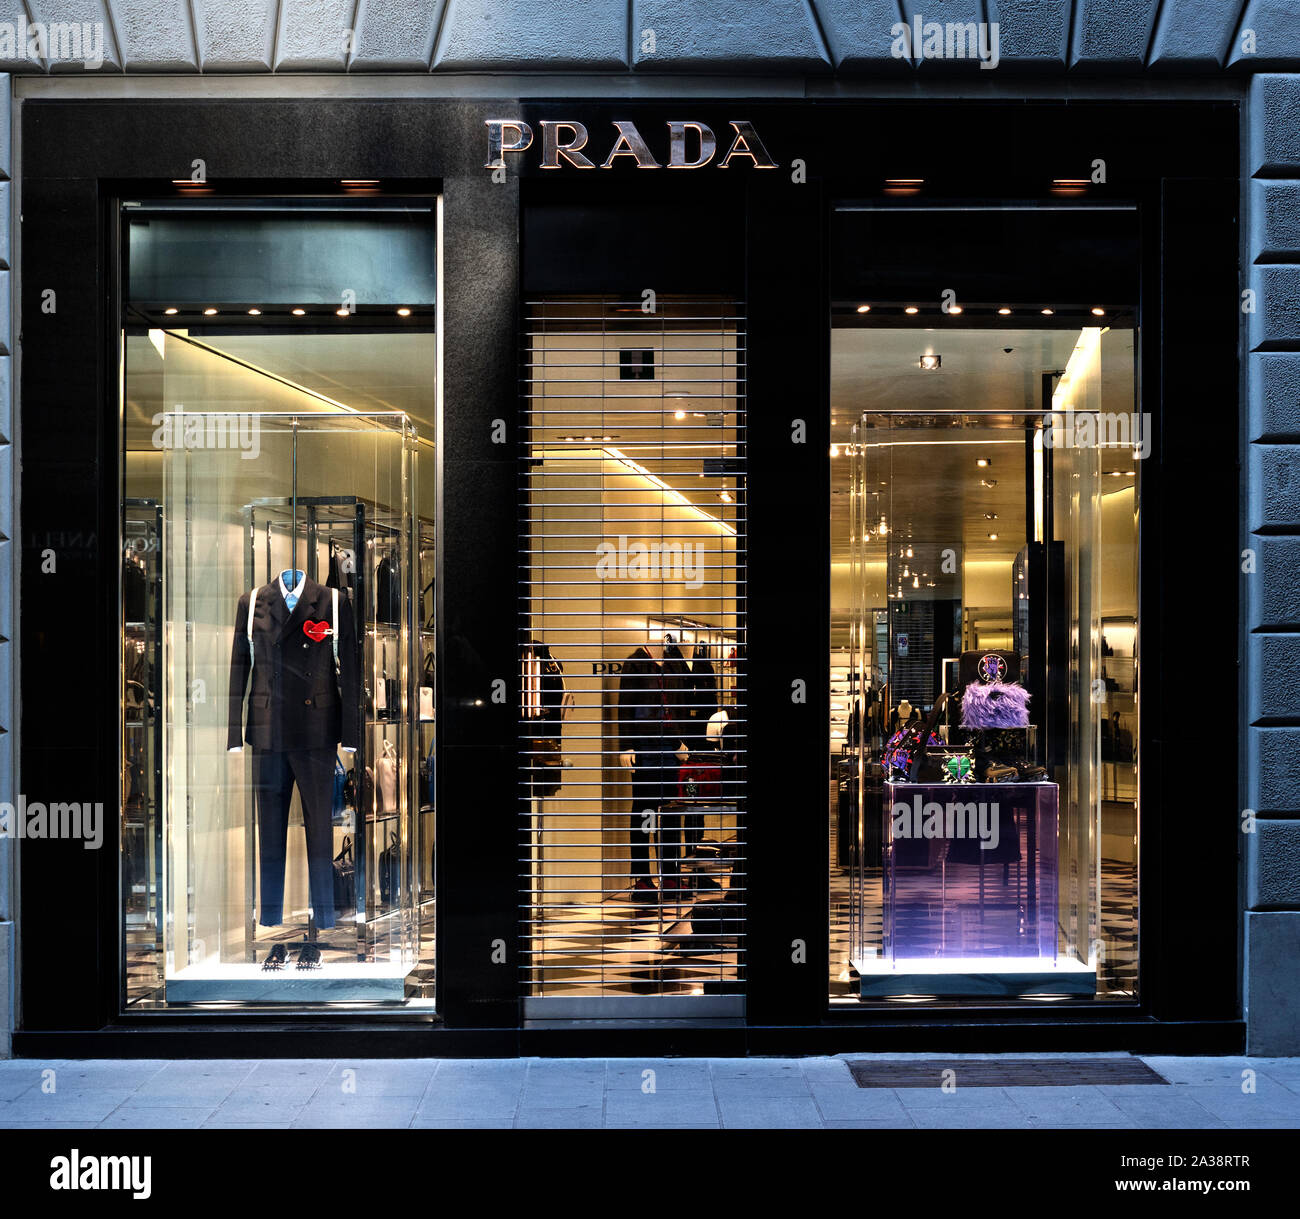 Prada, La casa de moda italiana de lujo, store, tienda, negocio, empresa,  Italia Fotografía de stock - Alamy